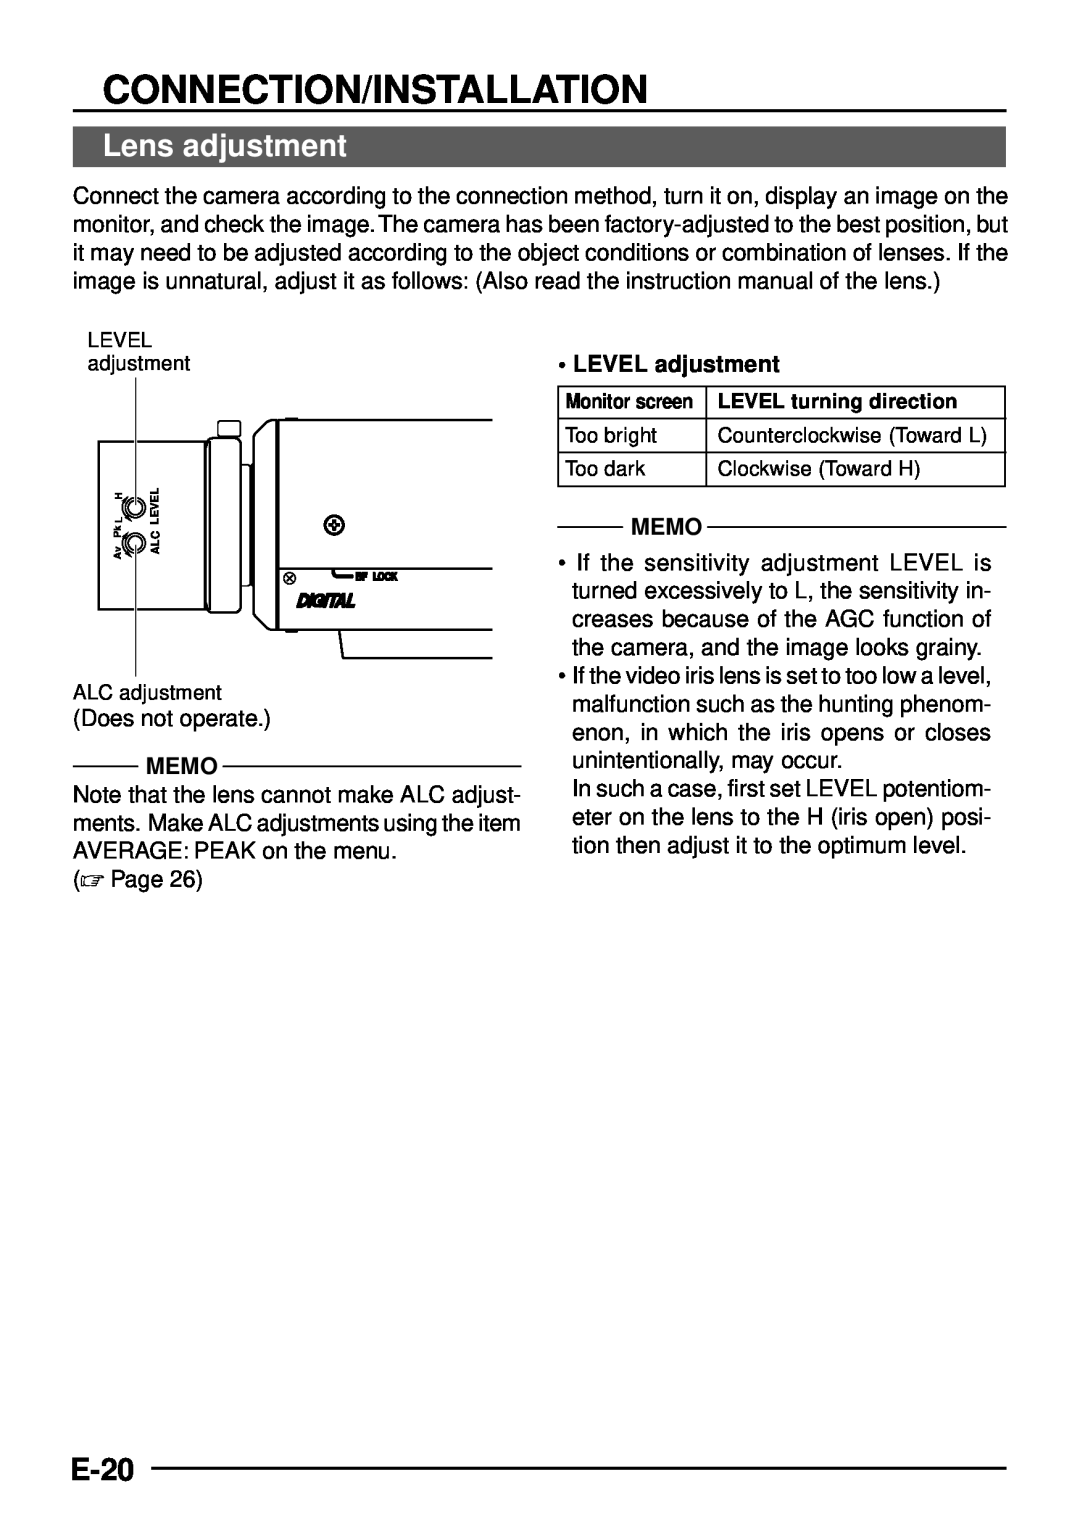 JVC TK-C1460 manual Lens adjustment, E-20, Connection/Installation, Memo, LEVEL adjustment, LEVEL turning direction 